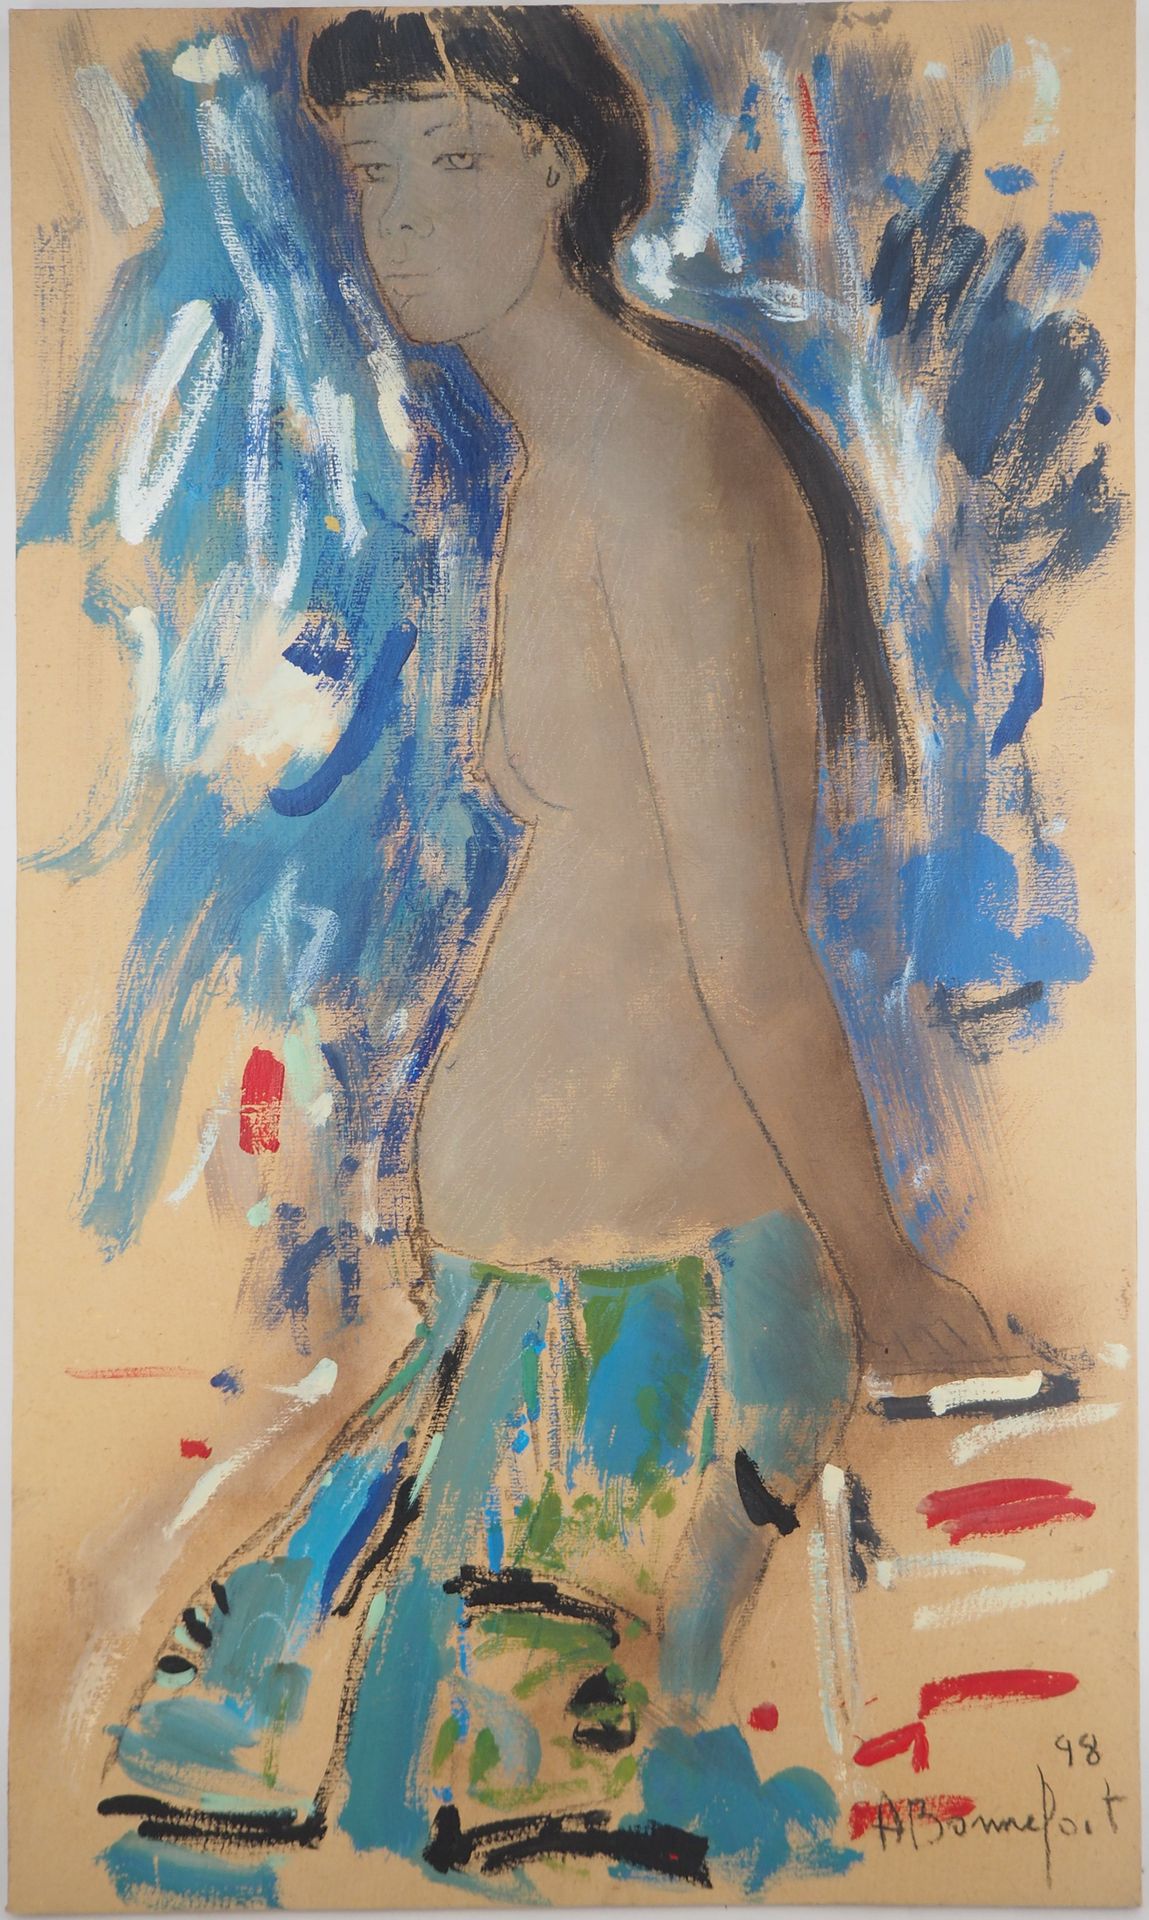 Alain BONNEFOIT Alain Bonnefoit

Homenaje a Gauguin : Maeva, 1998

Óleo sobre pa&hellip;